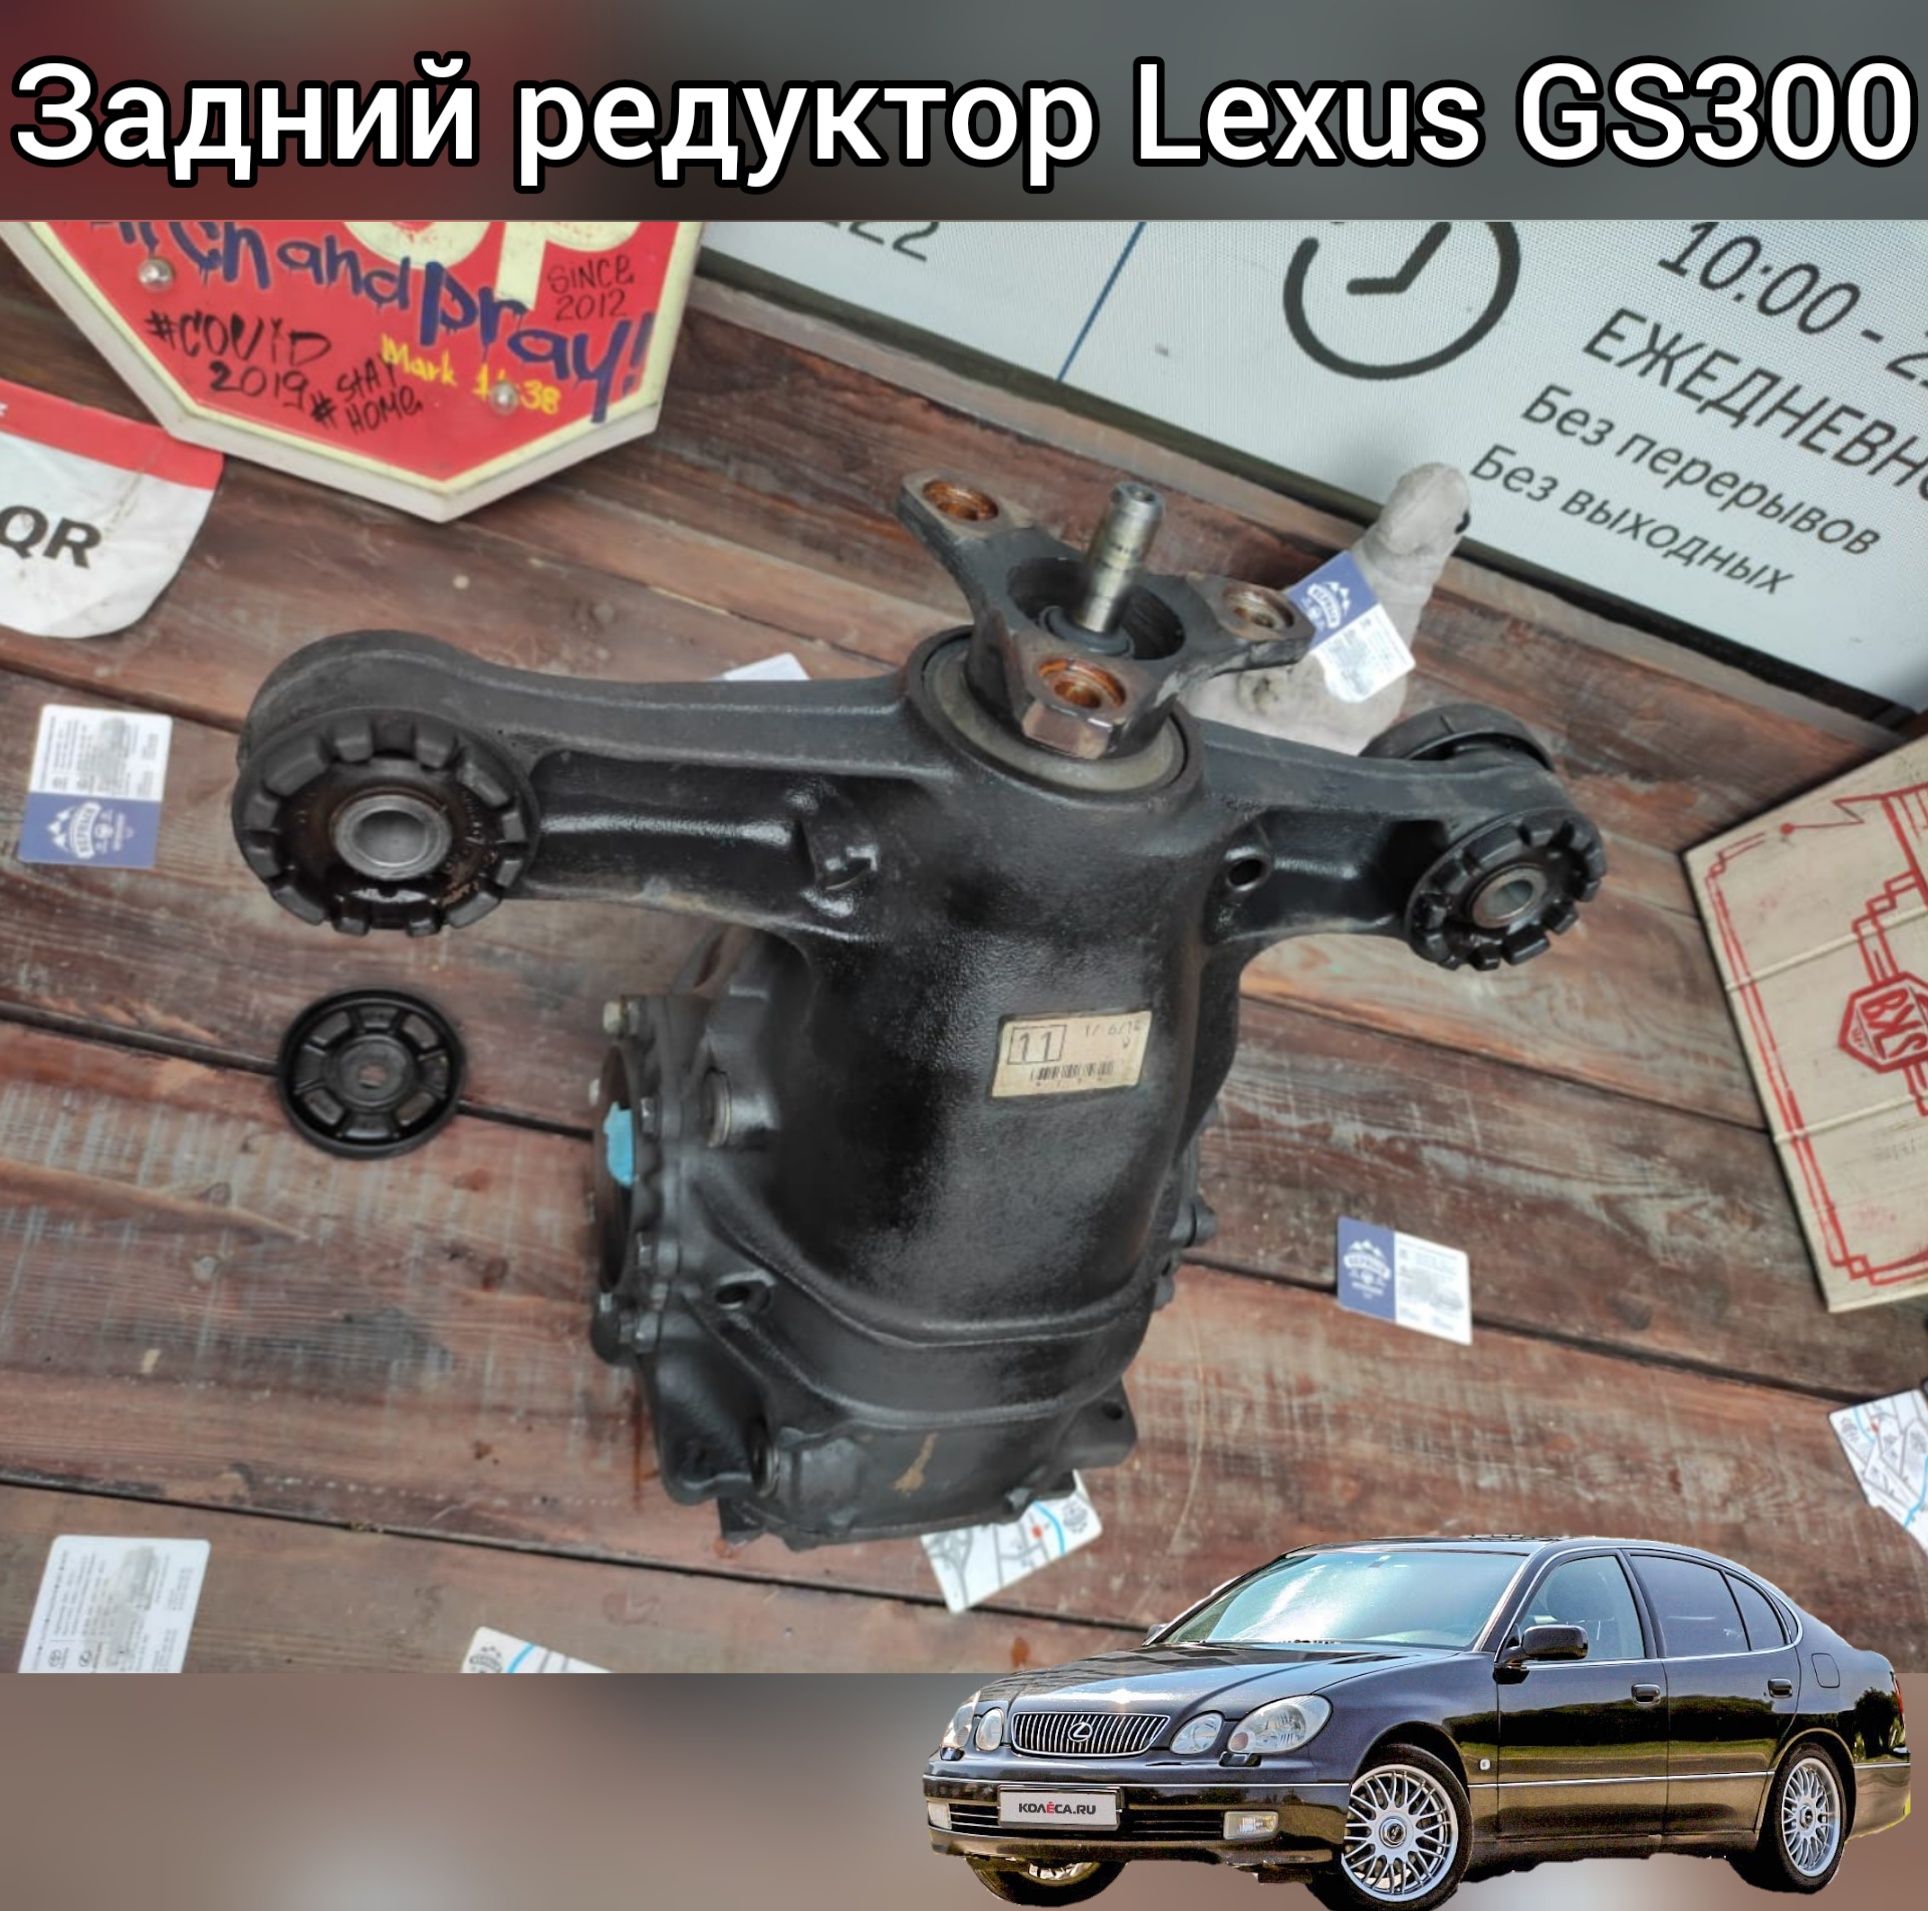 Задний редуктор Lexus GS300 (160)